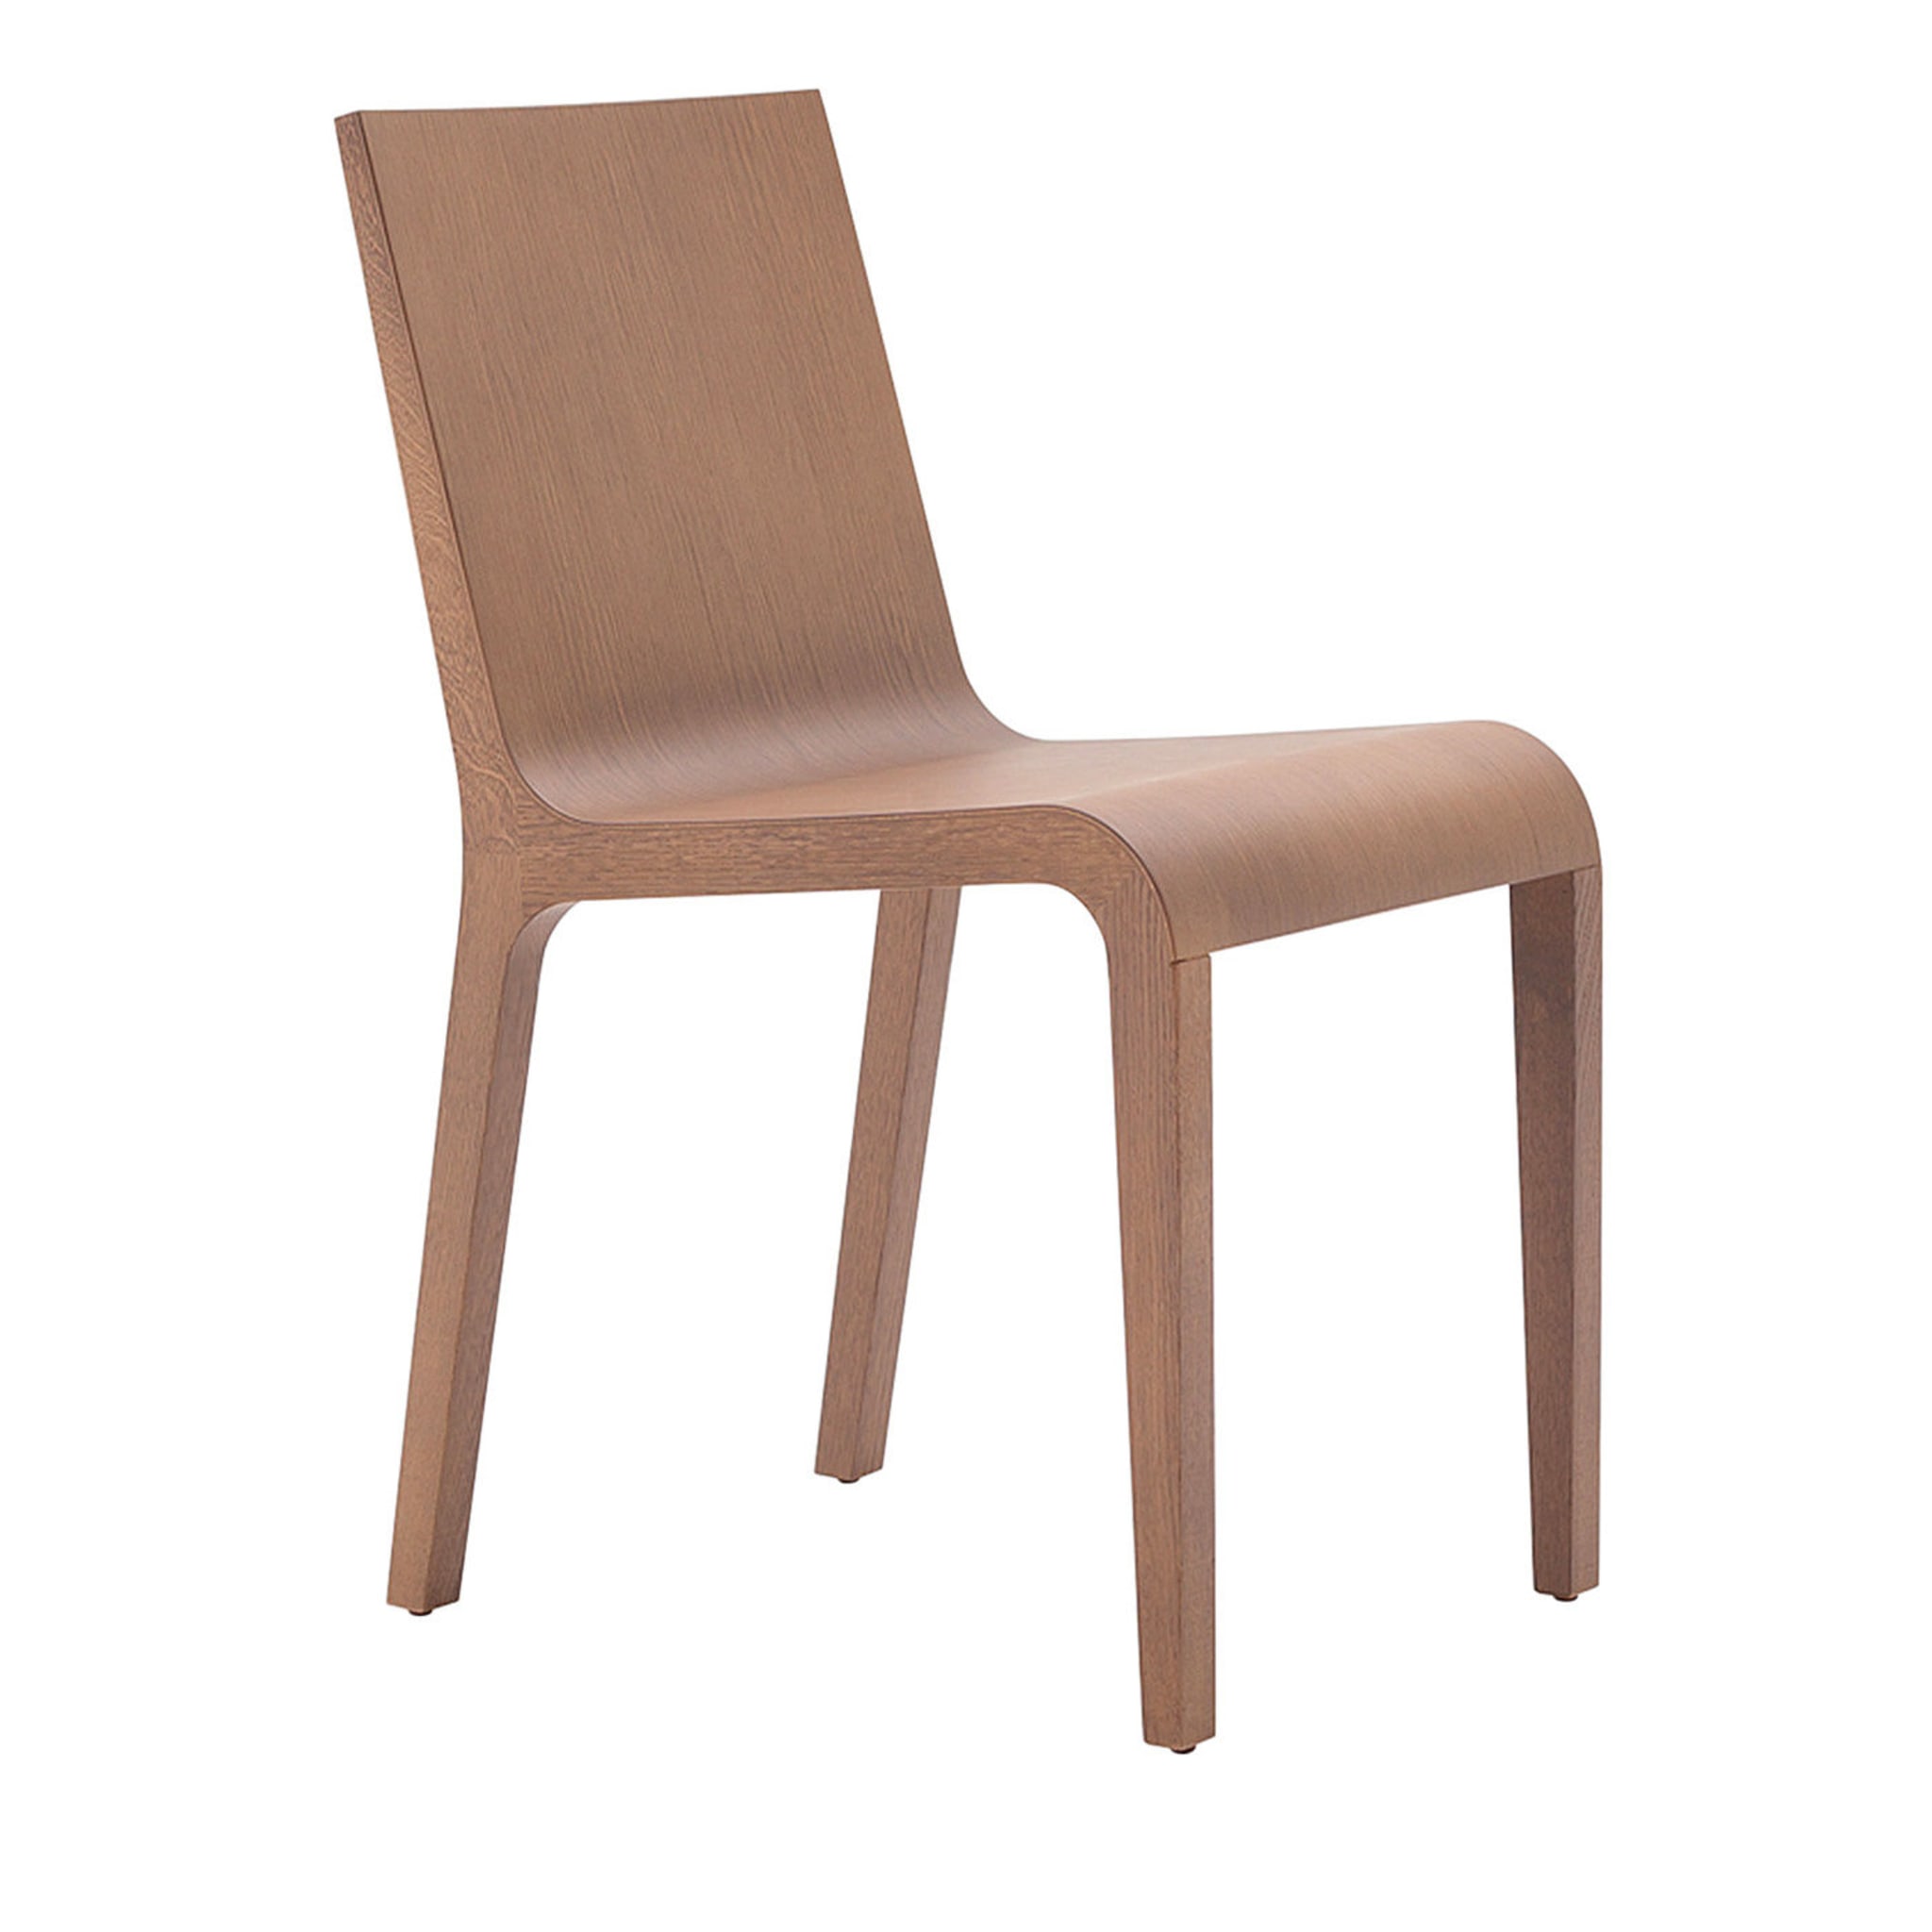 Foglia Chair by Marco Ferreri - Main view